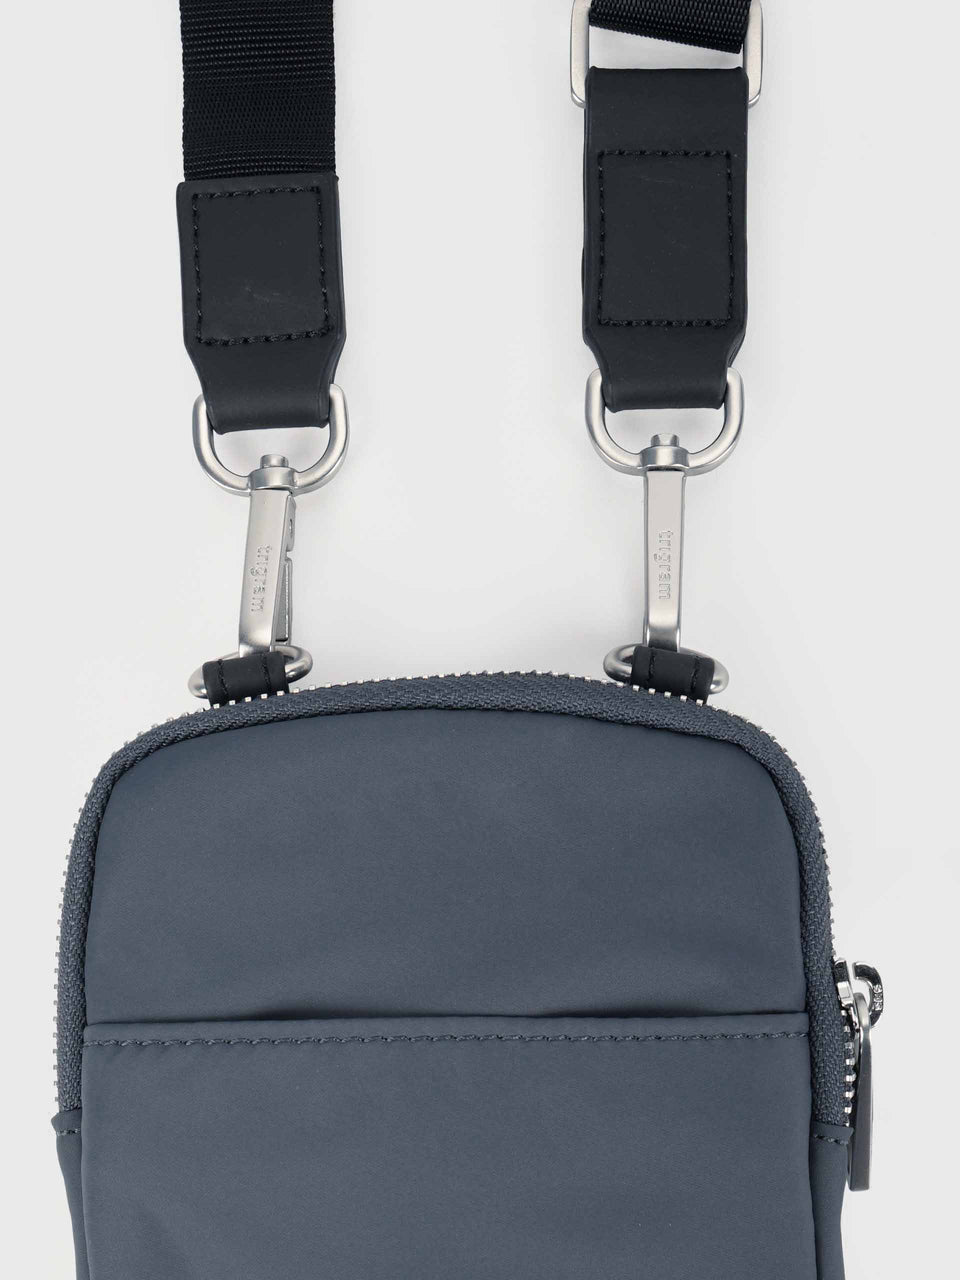 Double-Phone Bag - Bleu Lac